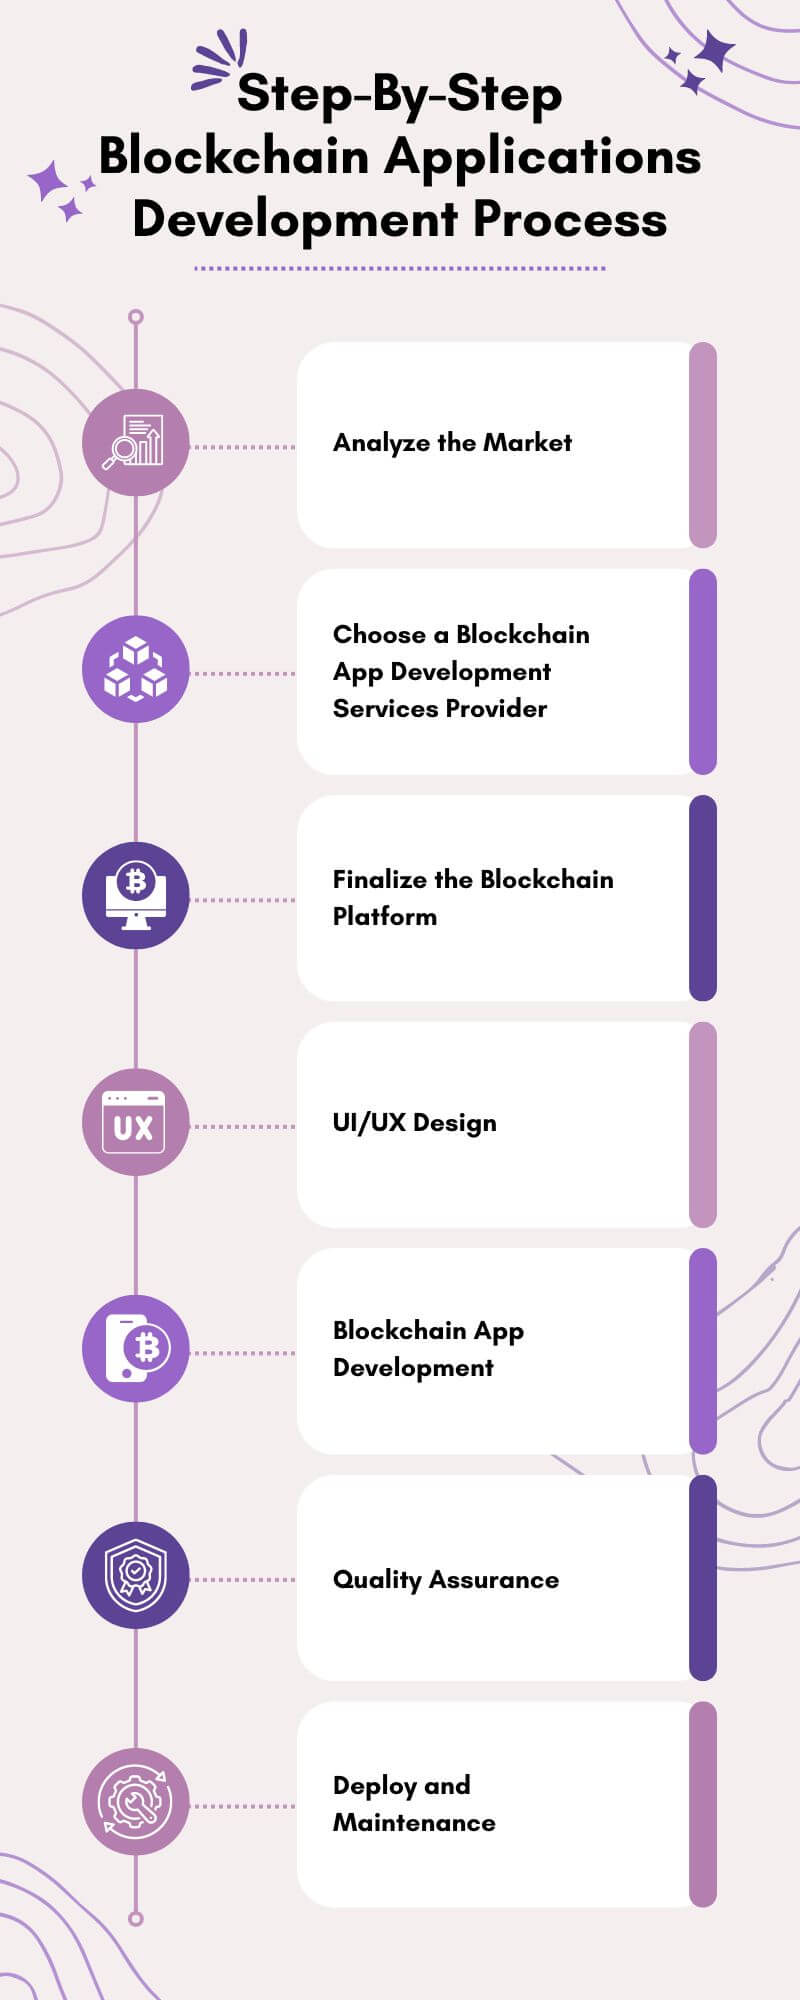 Step-By-Step Blockchain Applications Development Process